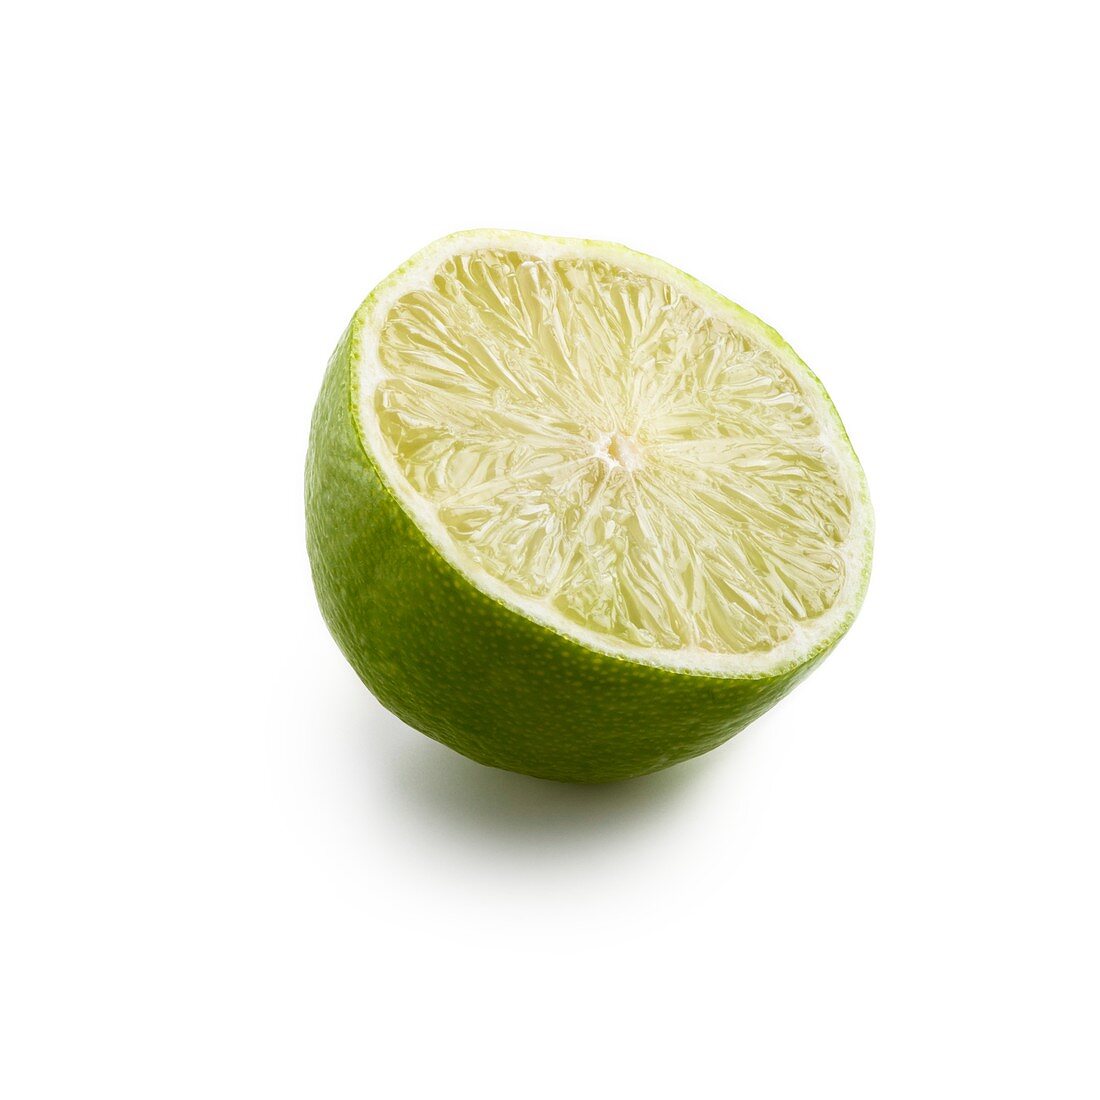 Half a lime